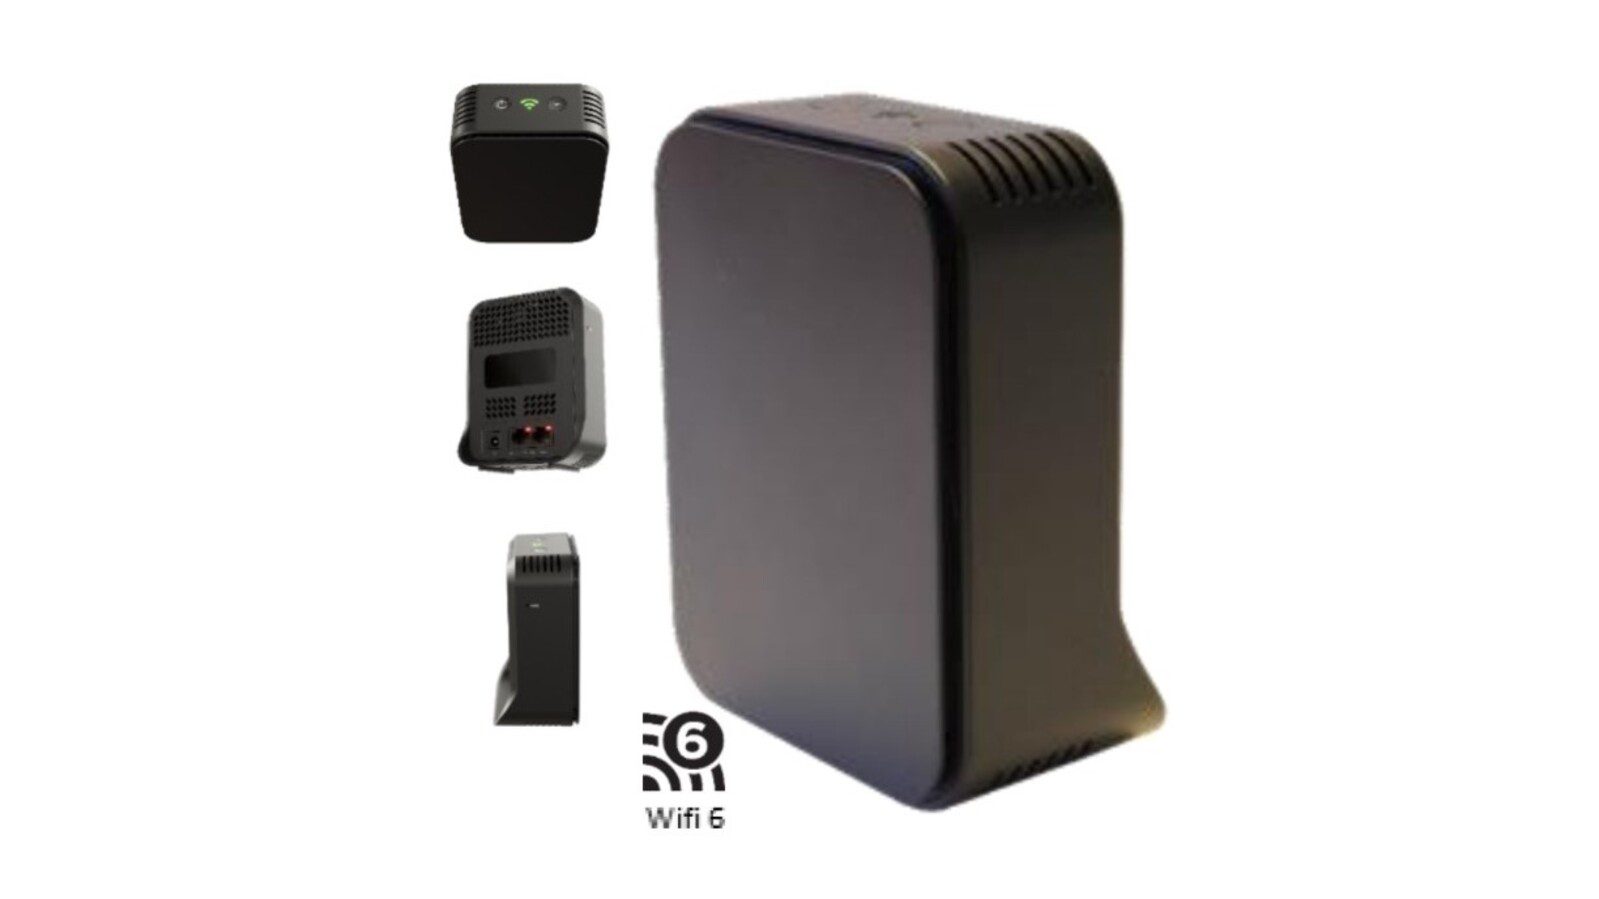 SFR lanserar “Smart WIFI”, dess repeater kompatibel med SFR Box 8 i Wi-Fi 6